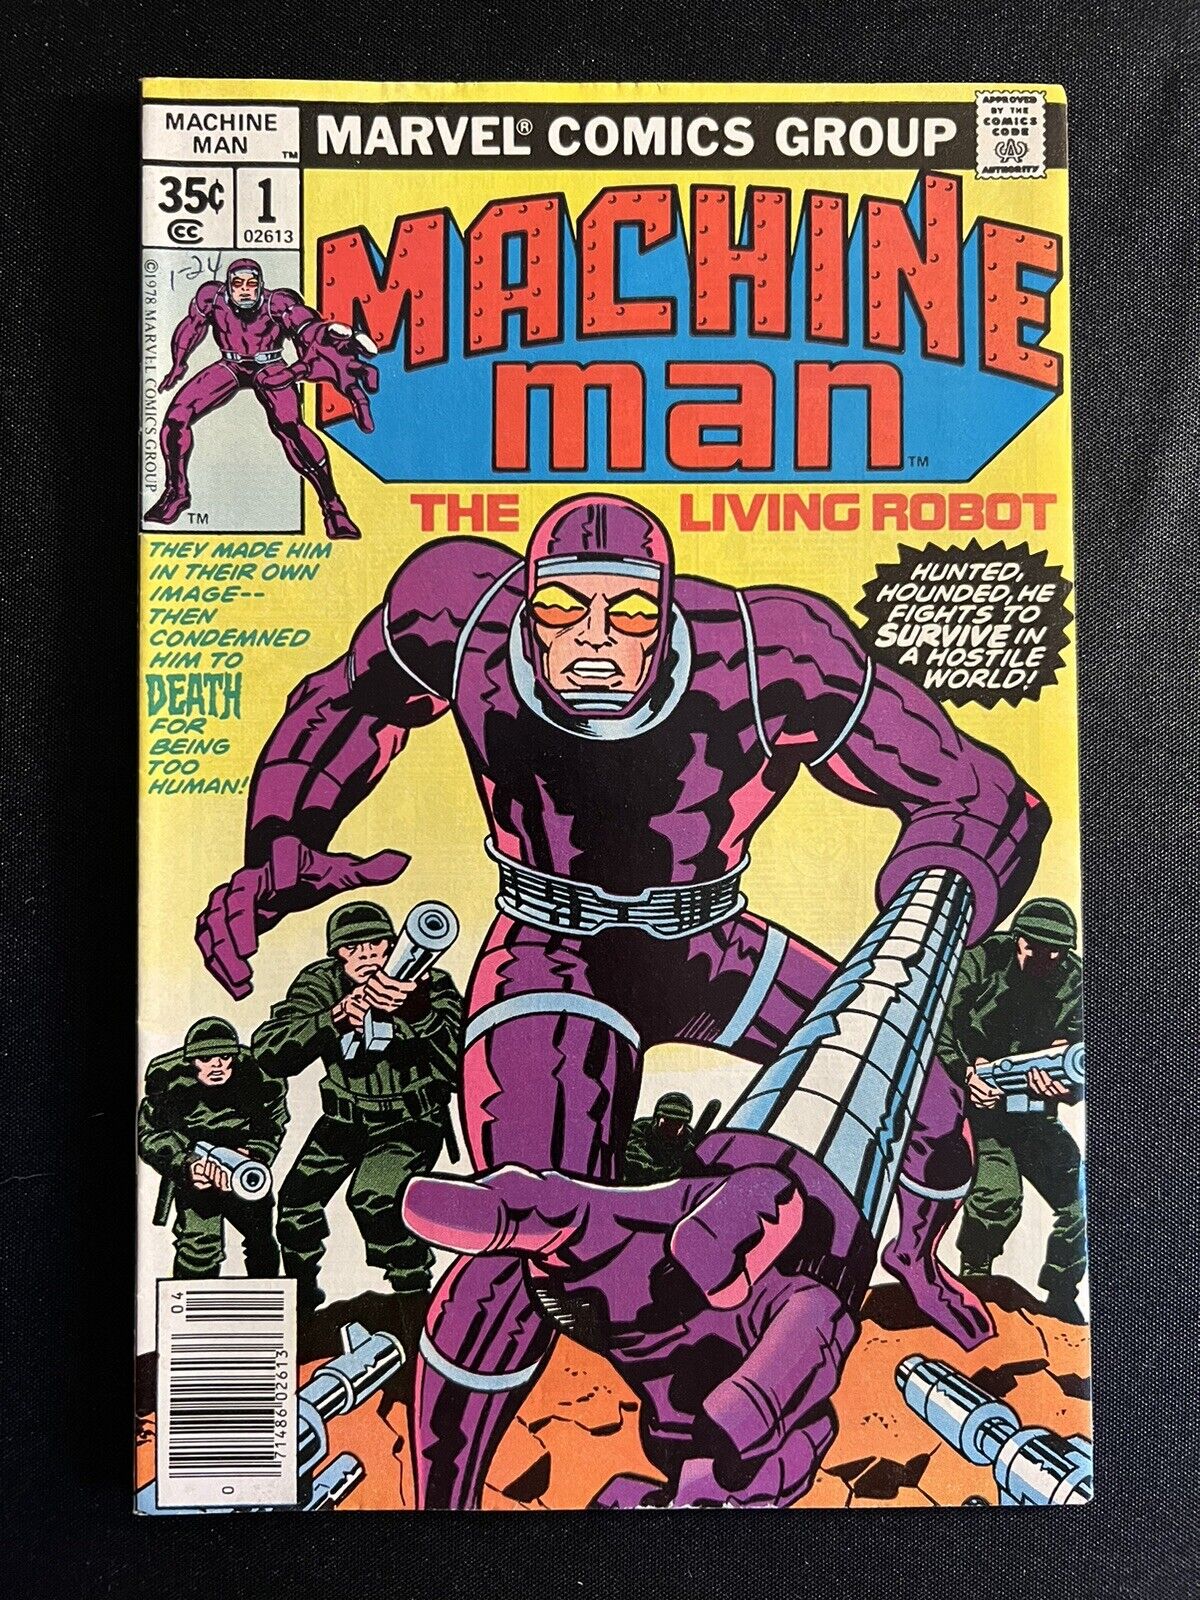 Machine Man #1 - Marvel Comics 1978 Premiere Issue Jack Kirby